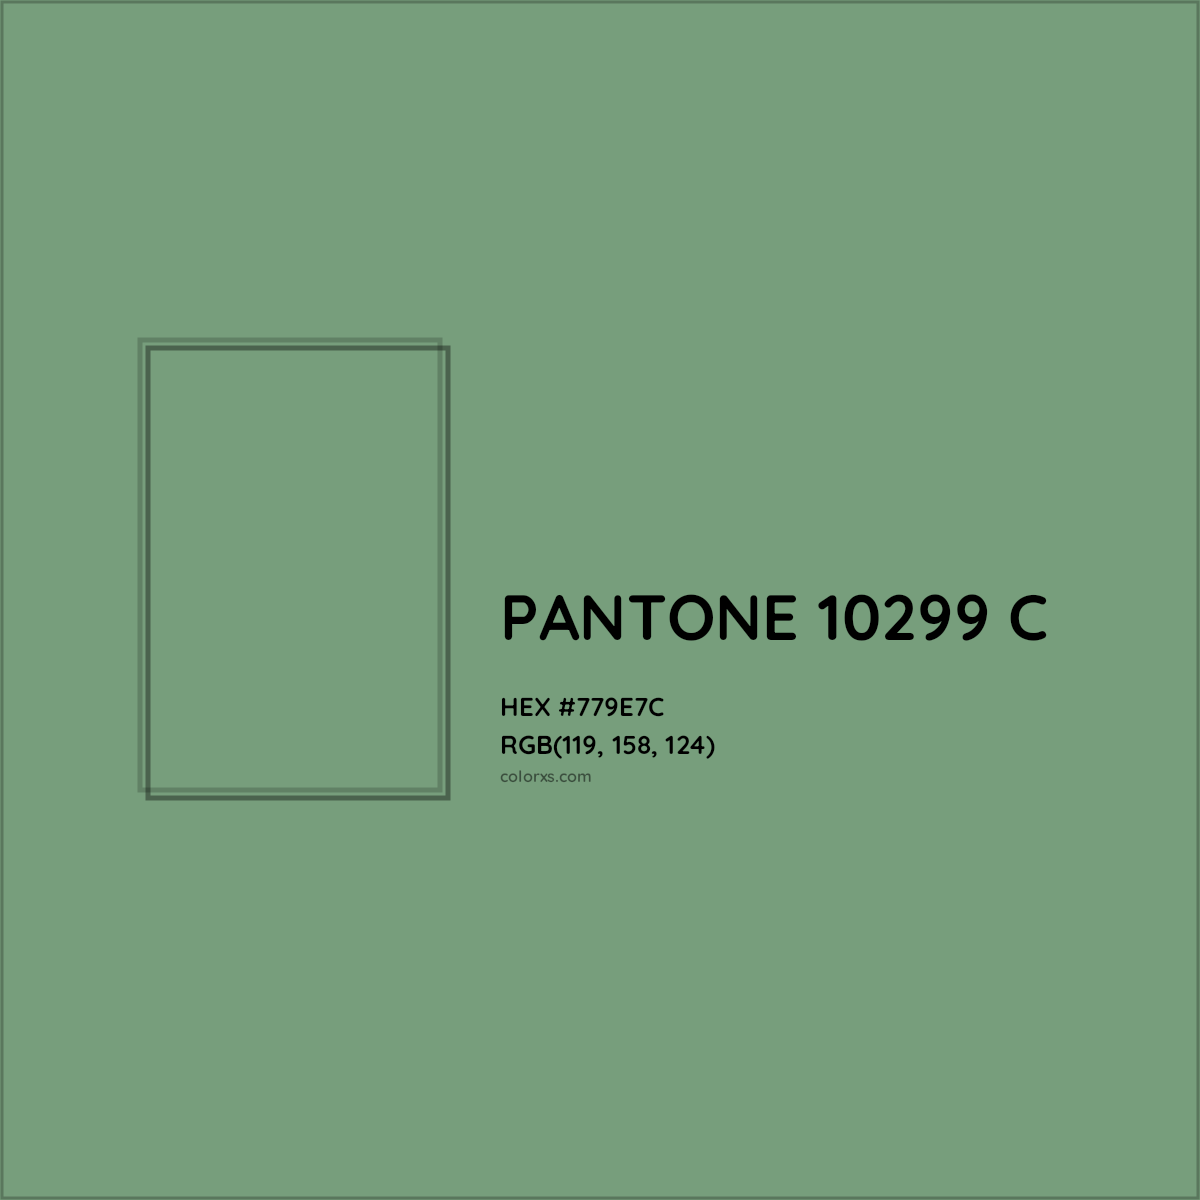 HEX #779E7C PANTONE 10299 C CMS Pantone PMS - Color Code